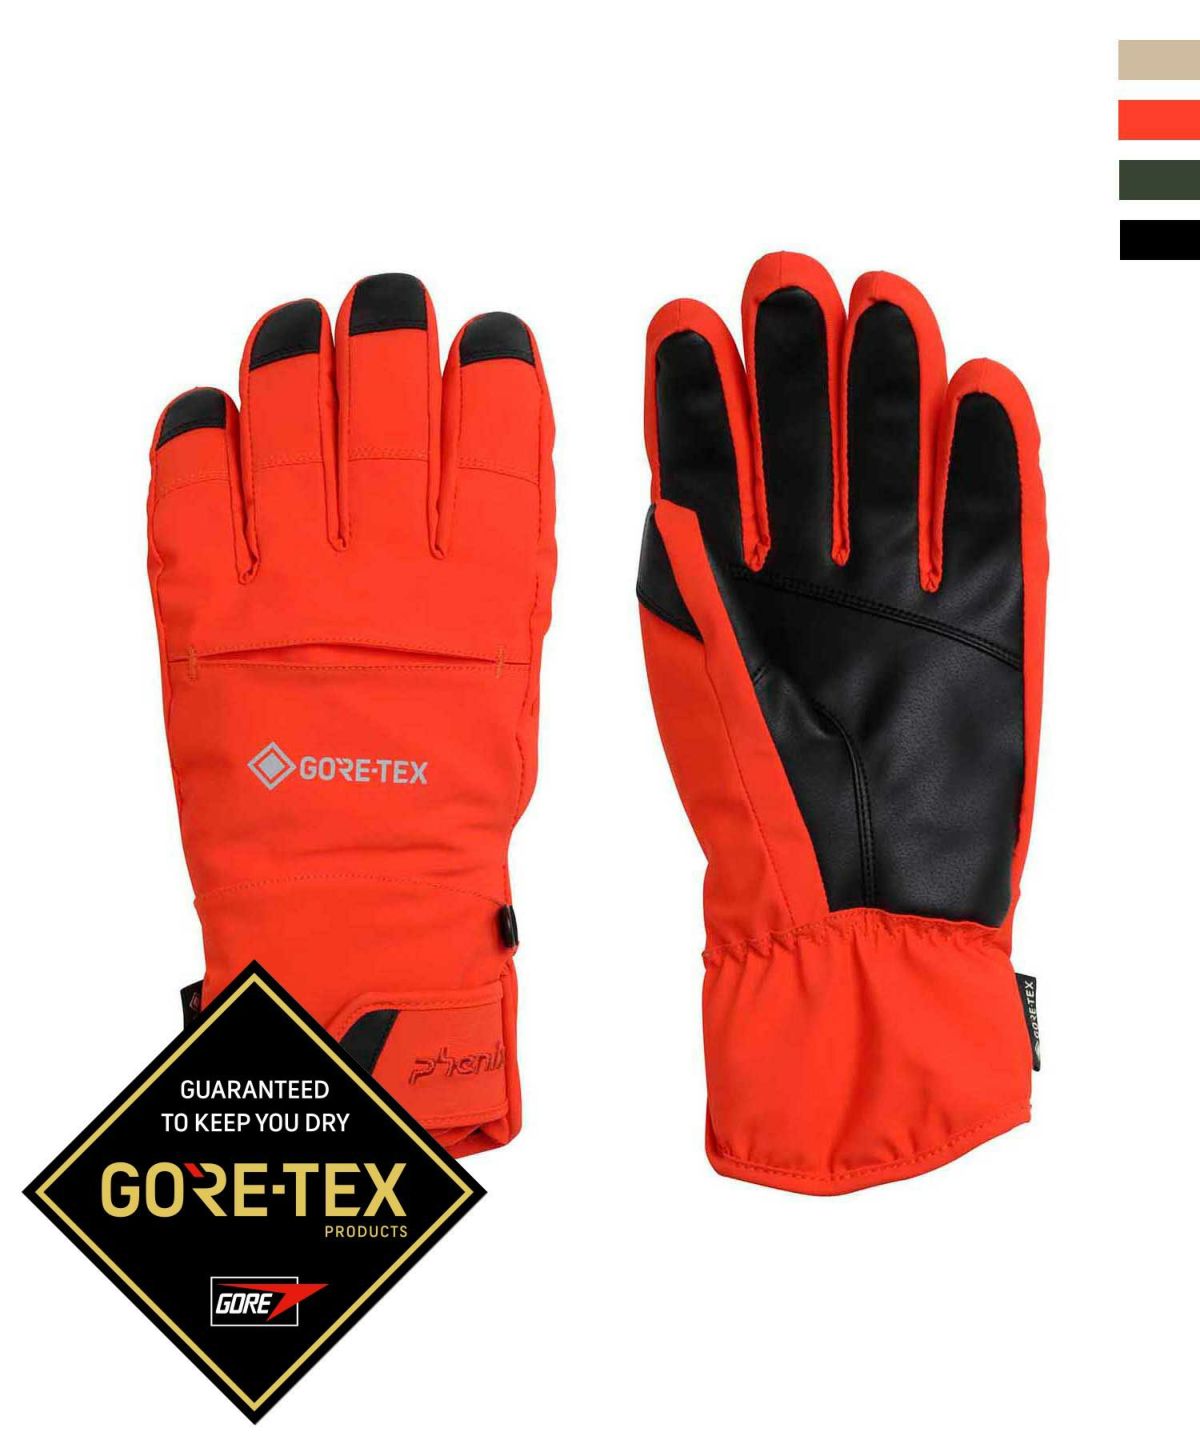 phenix(フェニックス)Thunderbolt Gloves メンズ/スキー